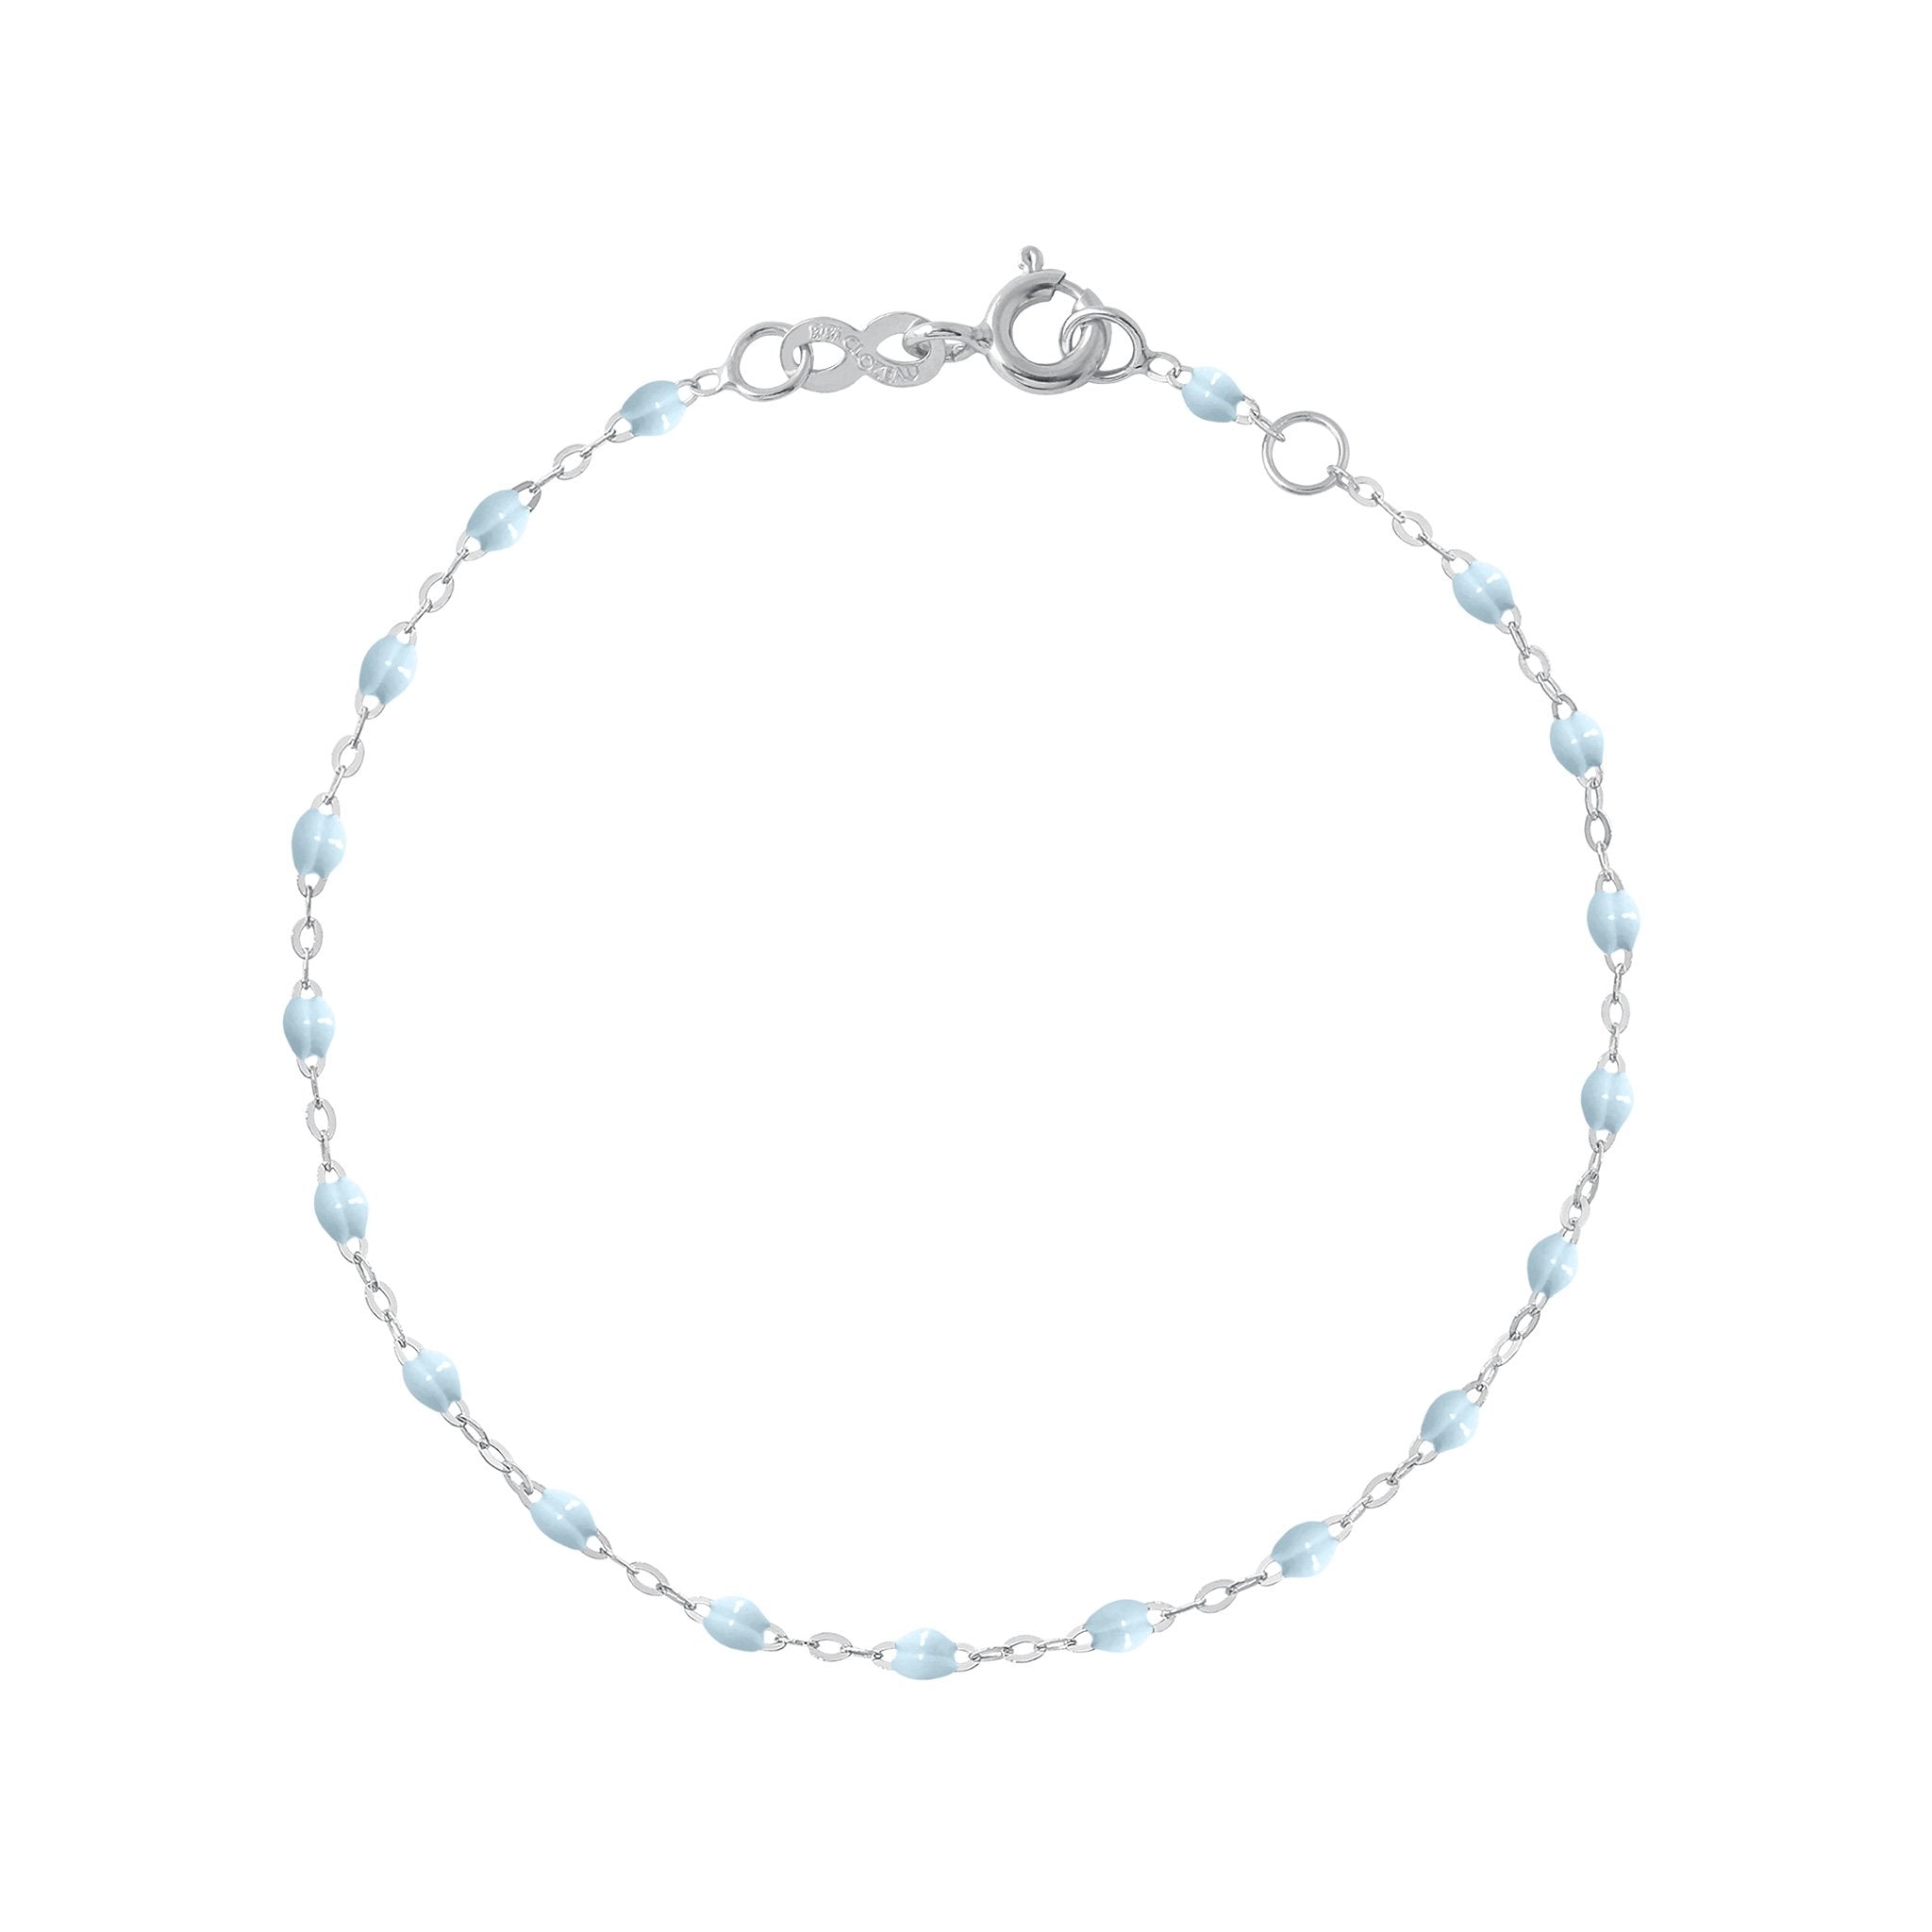 Bracelet bleu layette Classique Gigi, or blanc, 17 cm classique gigi Référence :  b3gi001g1517xx -1